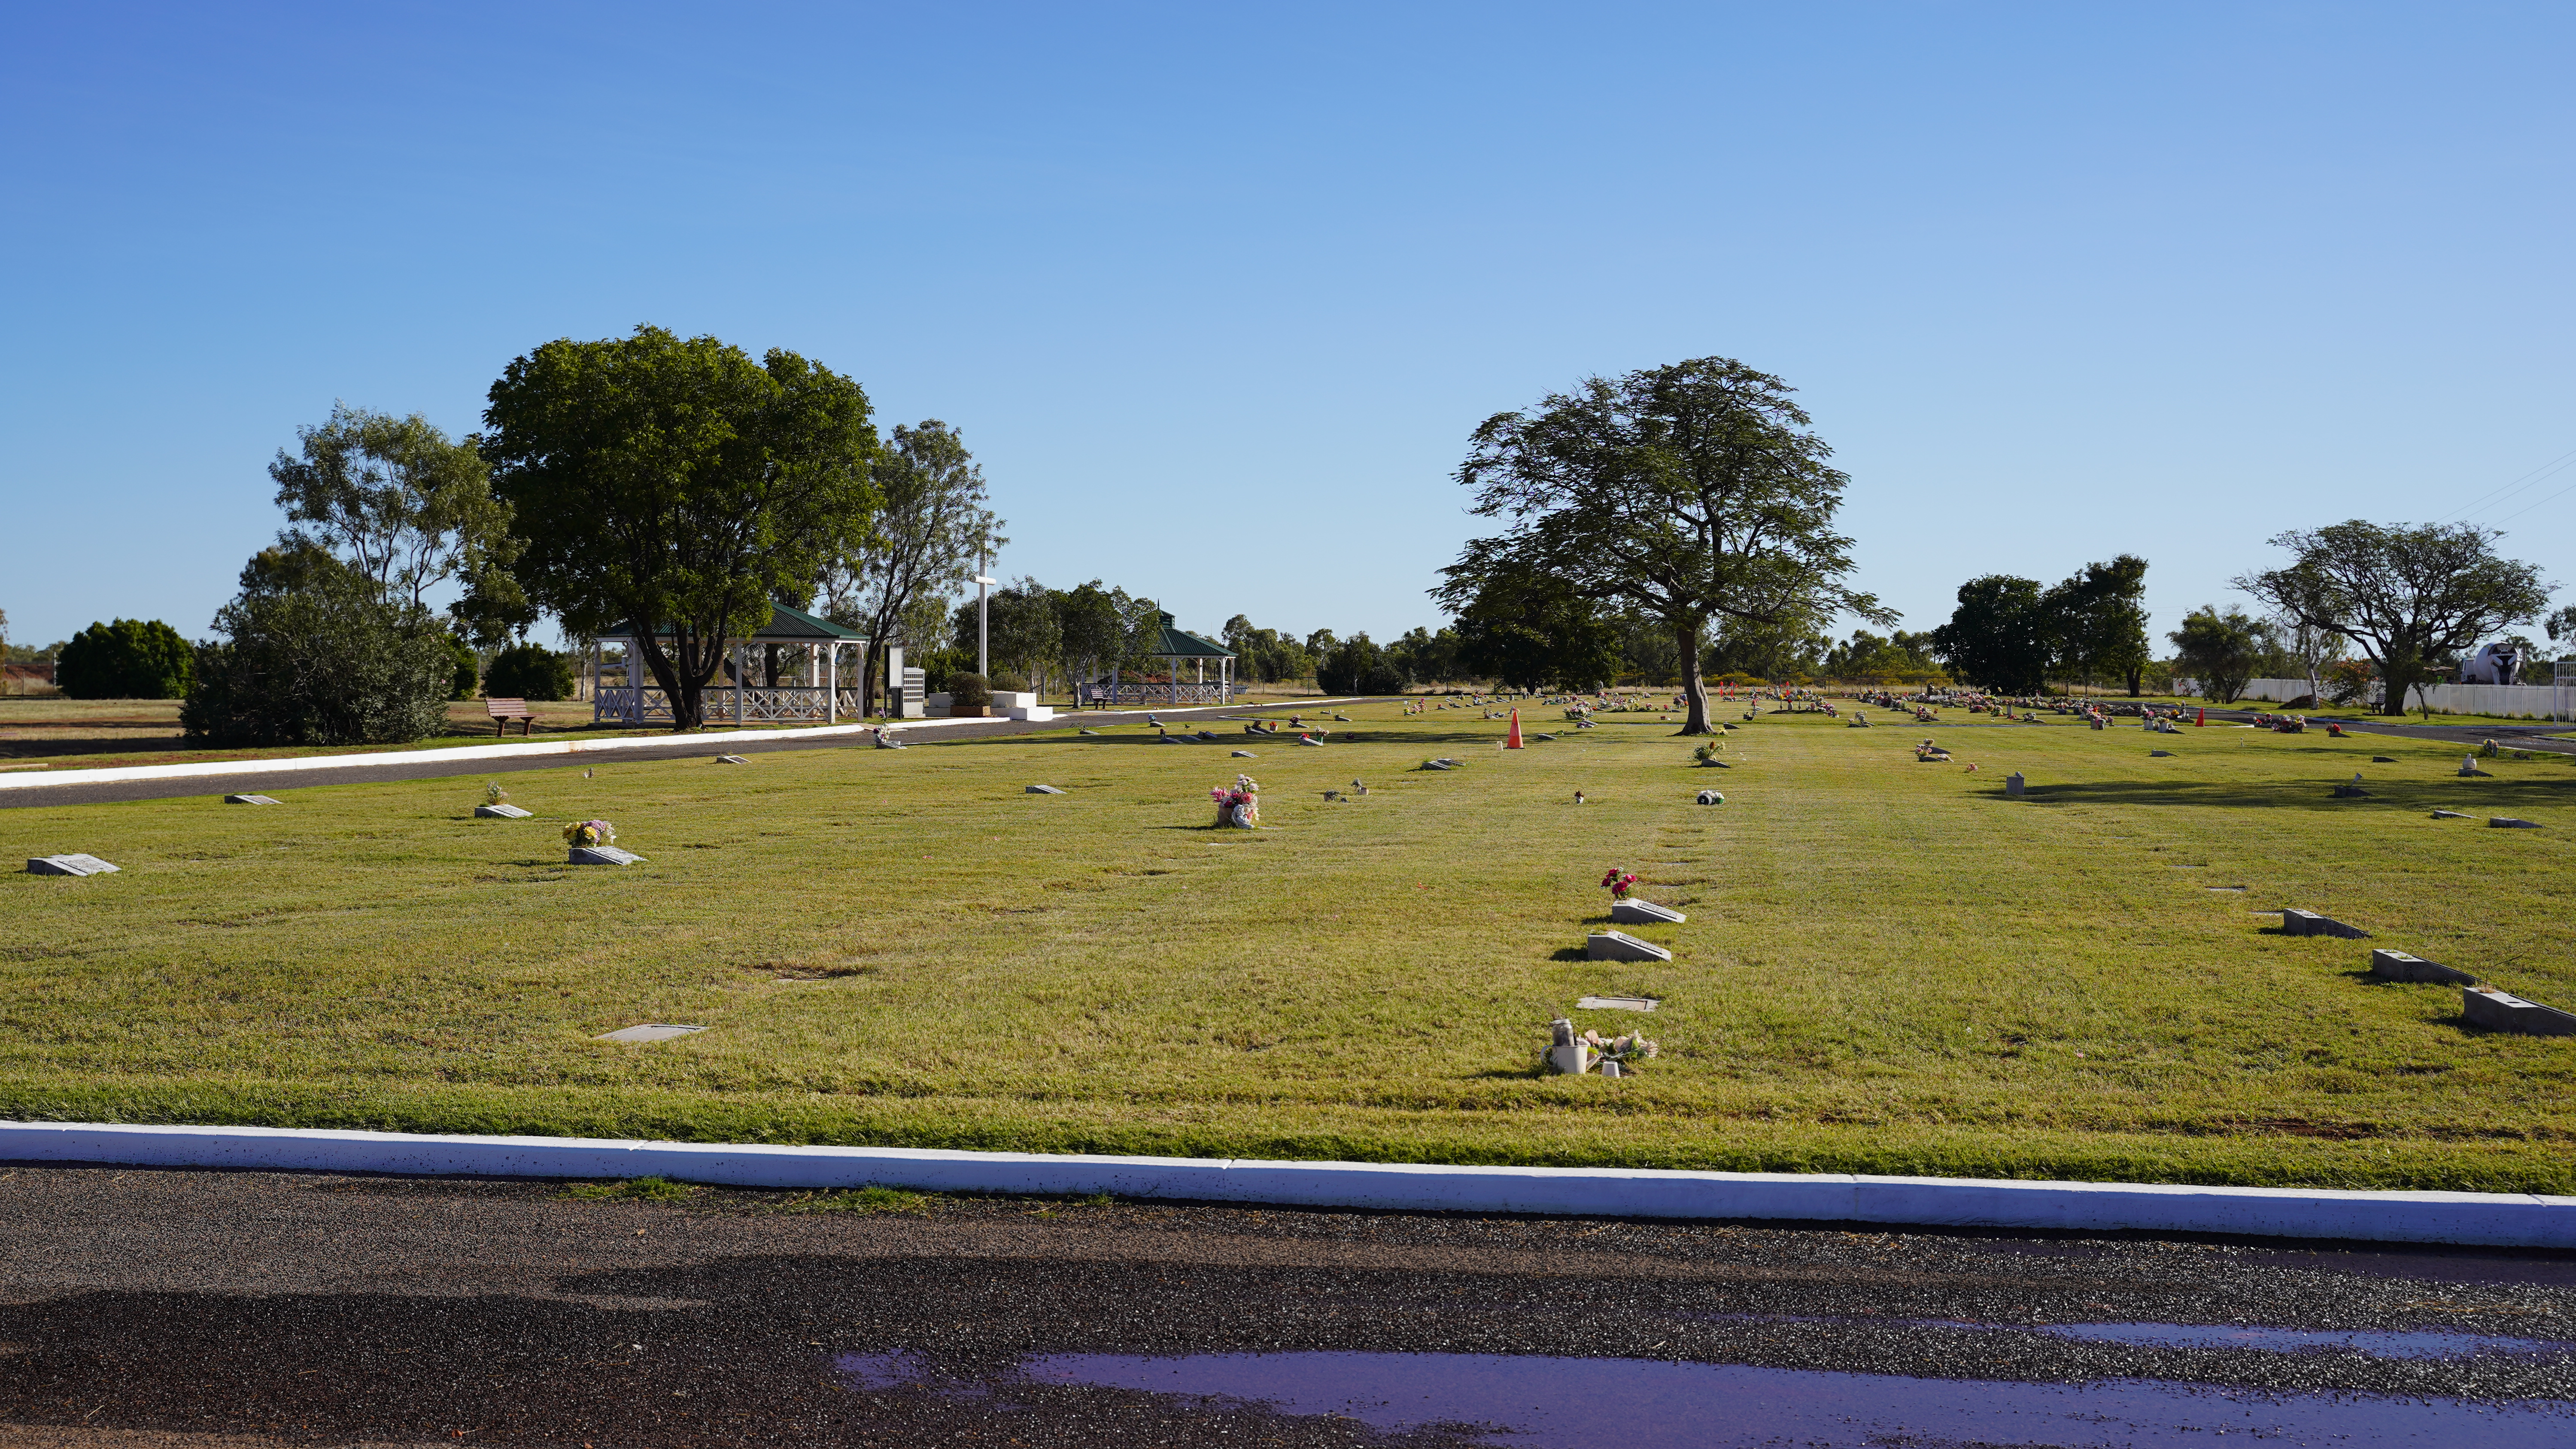 Lawn Cemetery